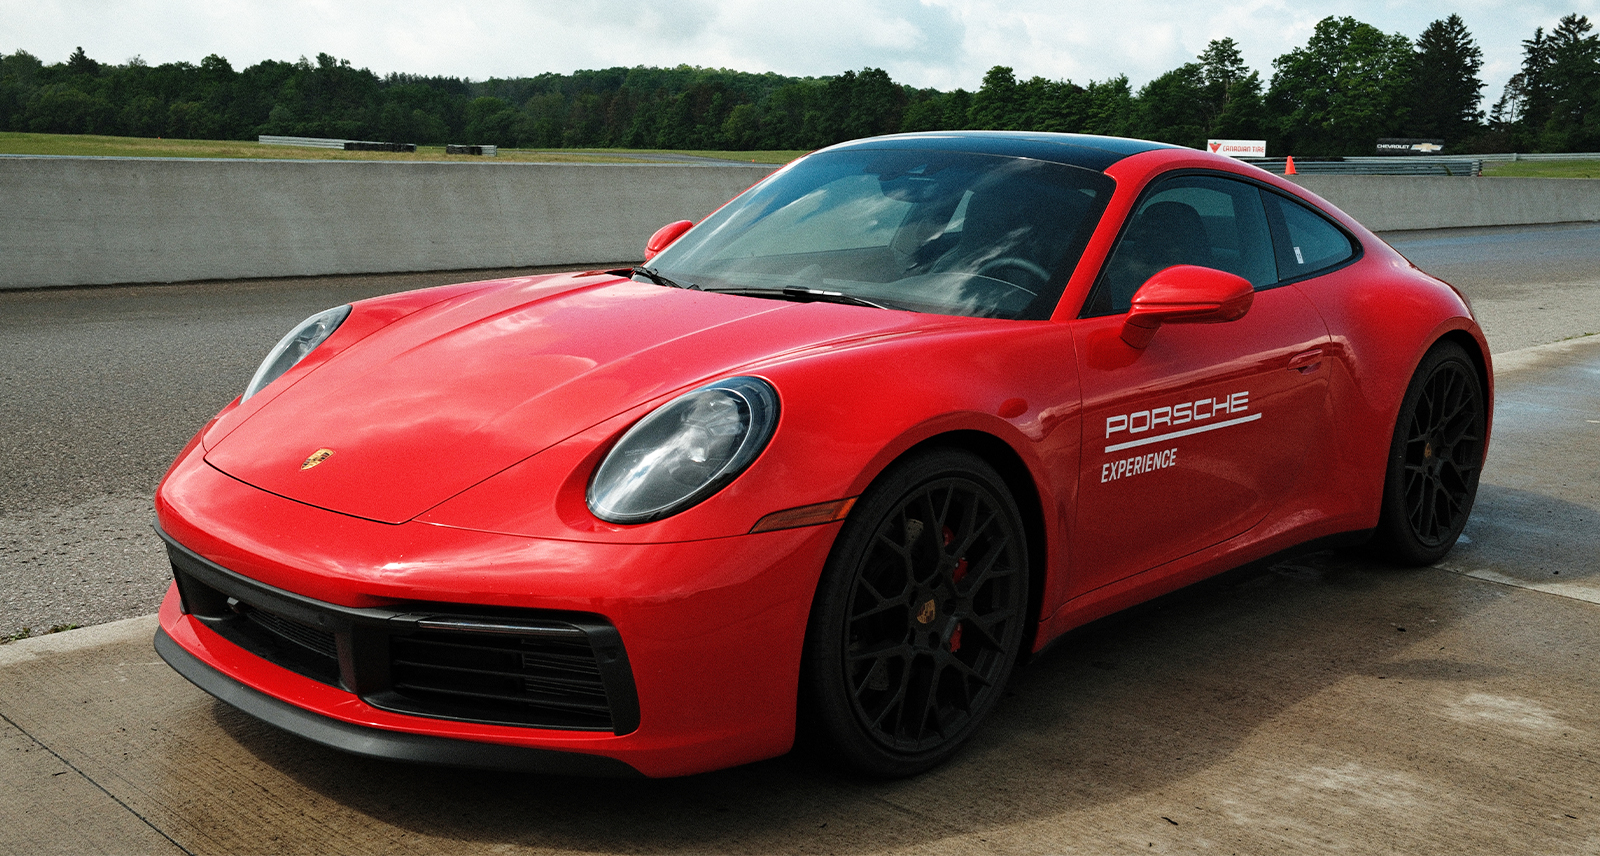 Porsche Drive Track; red car parked